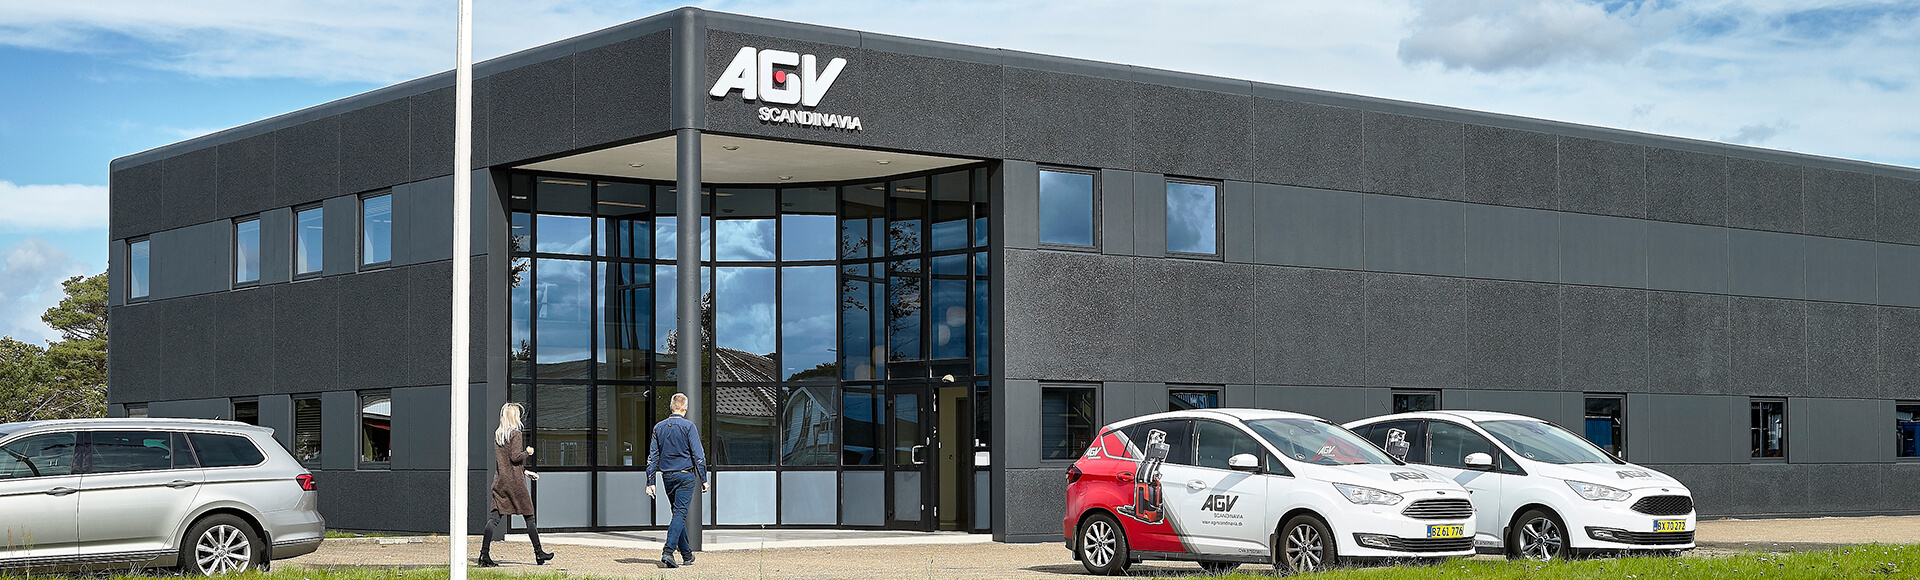 AGV Scandinavia etablerer nyt domicil i Skive